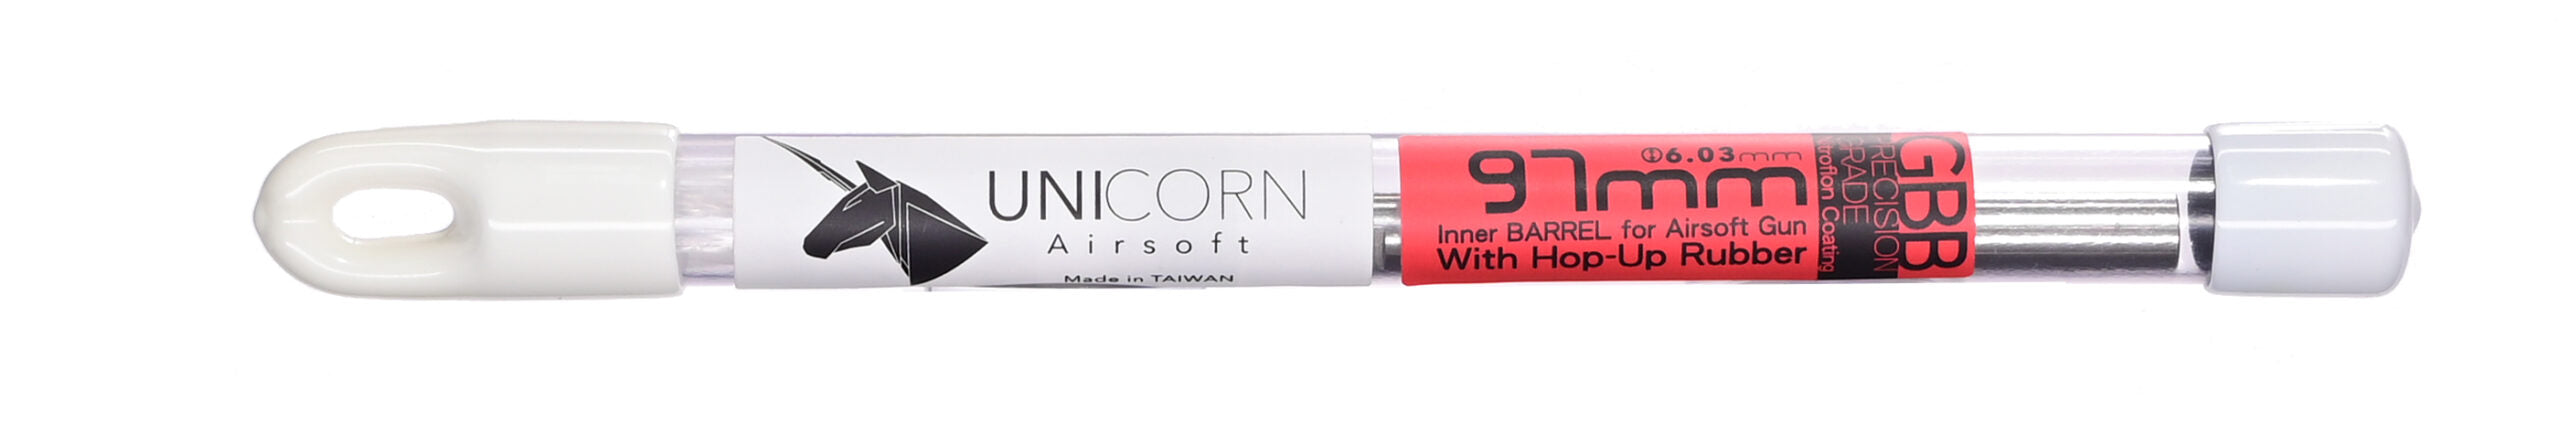 Unicorn 97mm Nitroflon Coating 6.03MM Ultimate Precision Inner Barrel